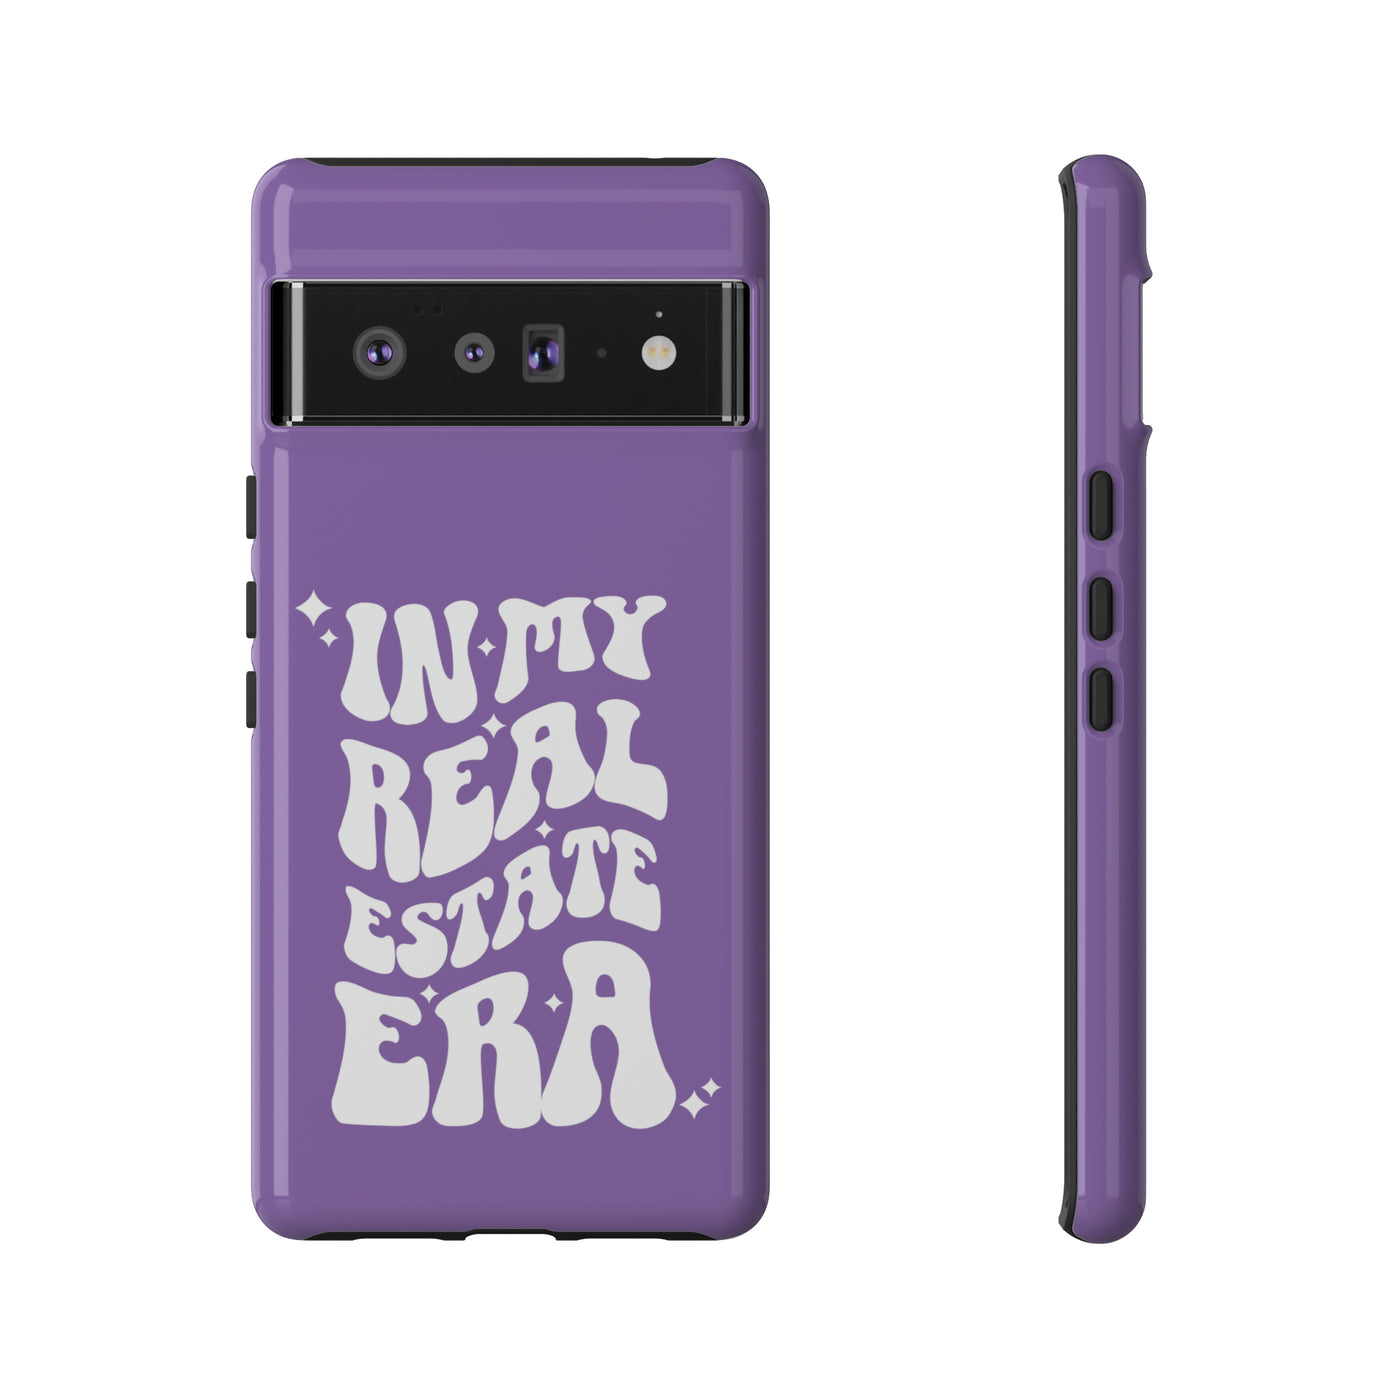 In My Real Estate Era Phone Case - Purple & White